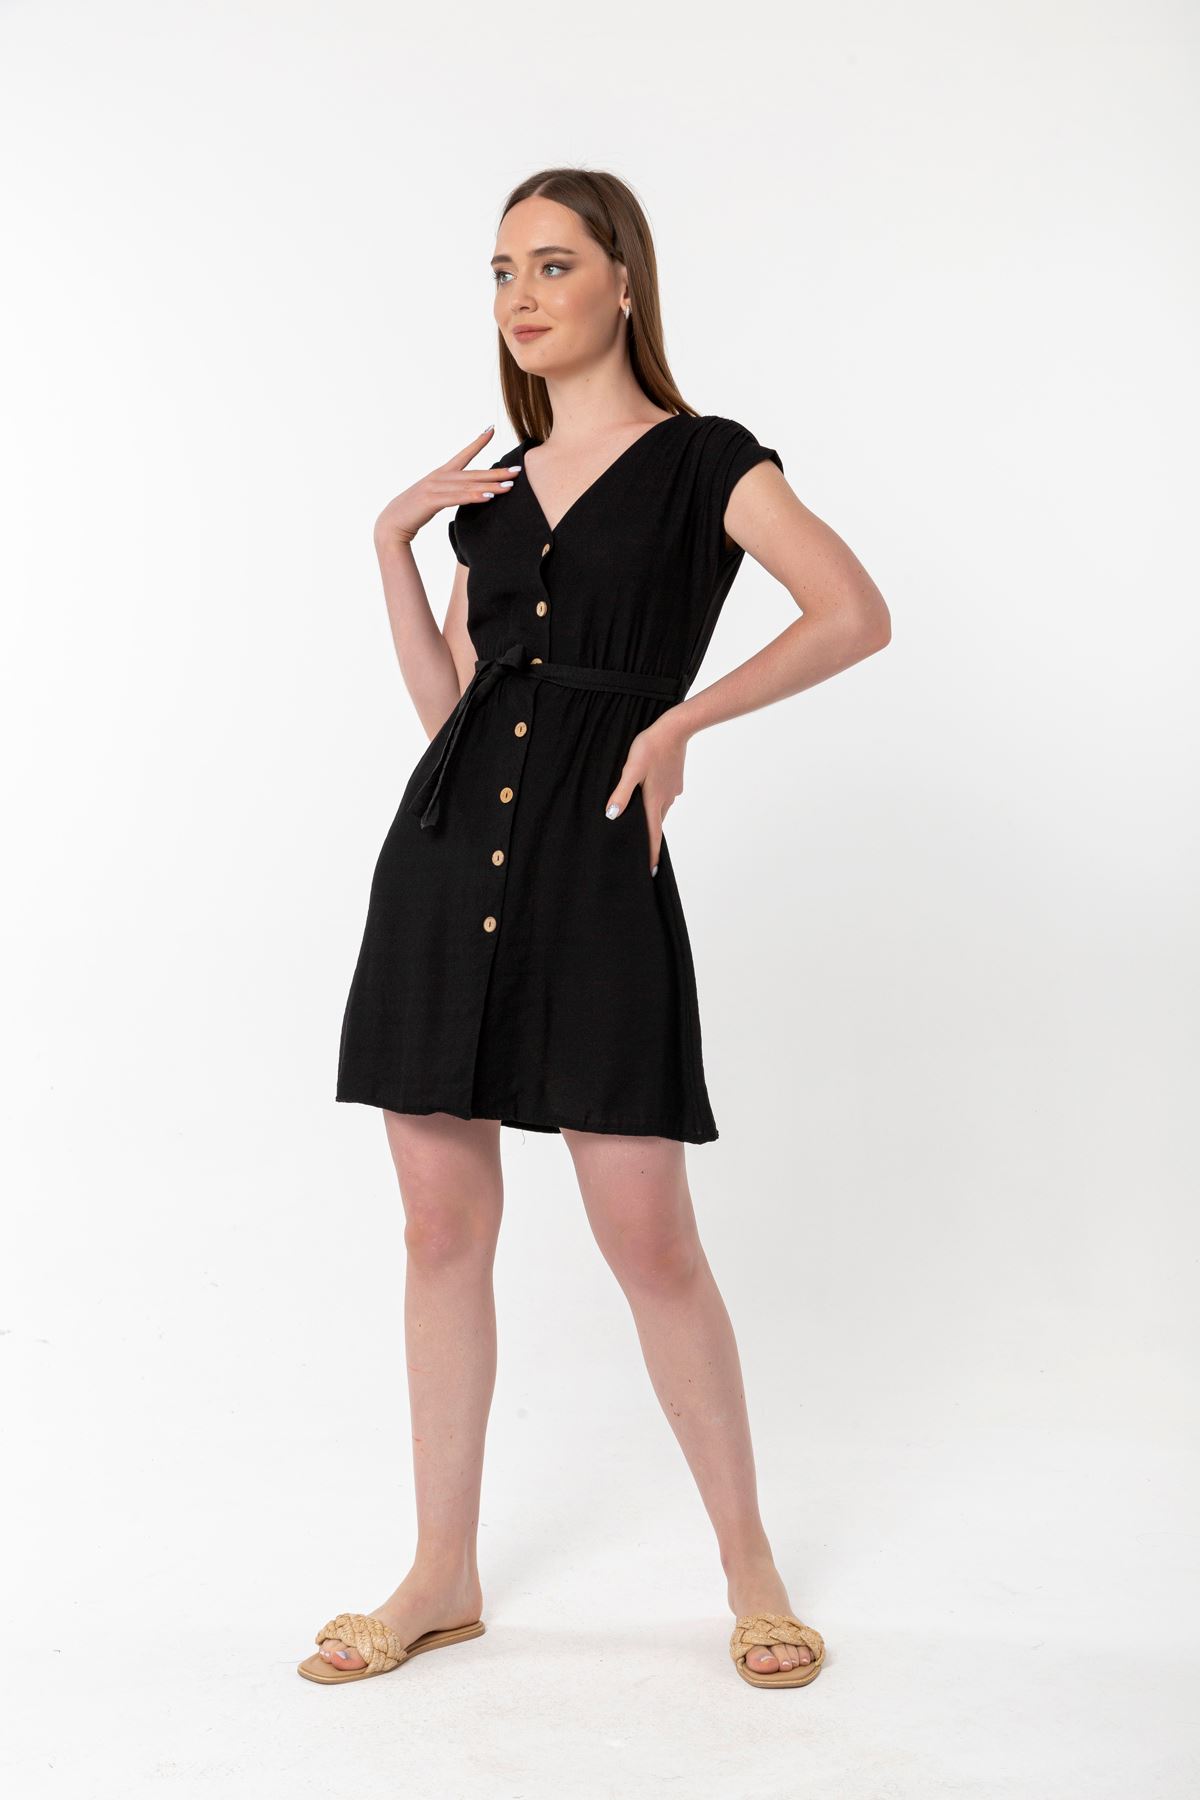 Linen Fabric Short Sleeve V-Neck Comfy Fit Women Dress - Black